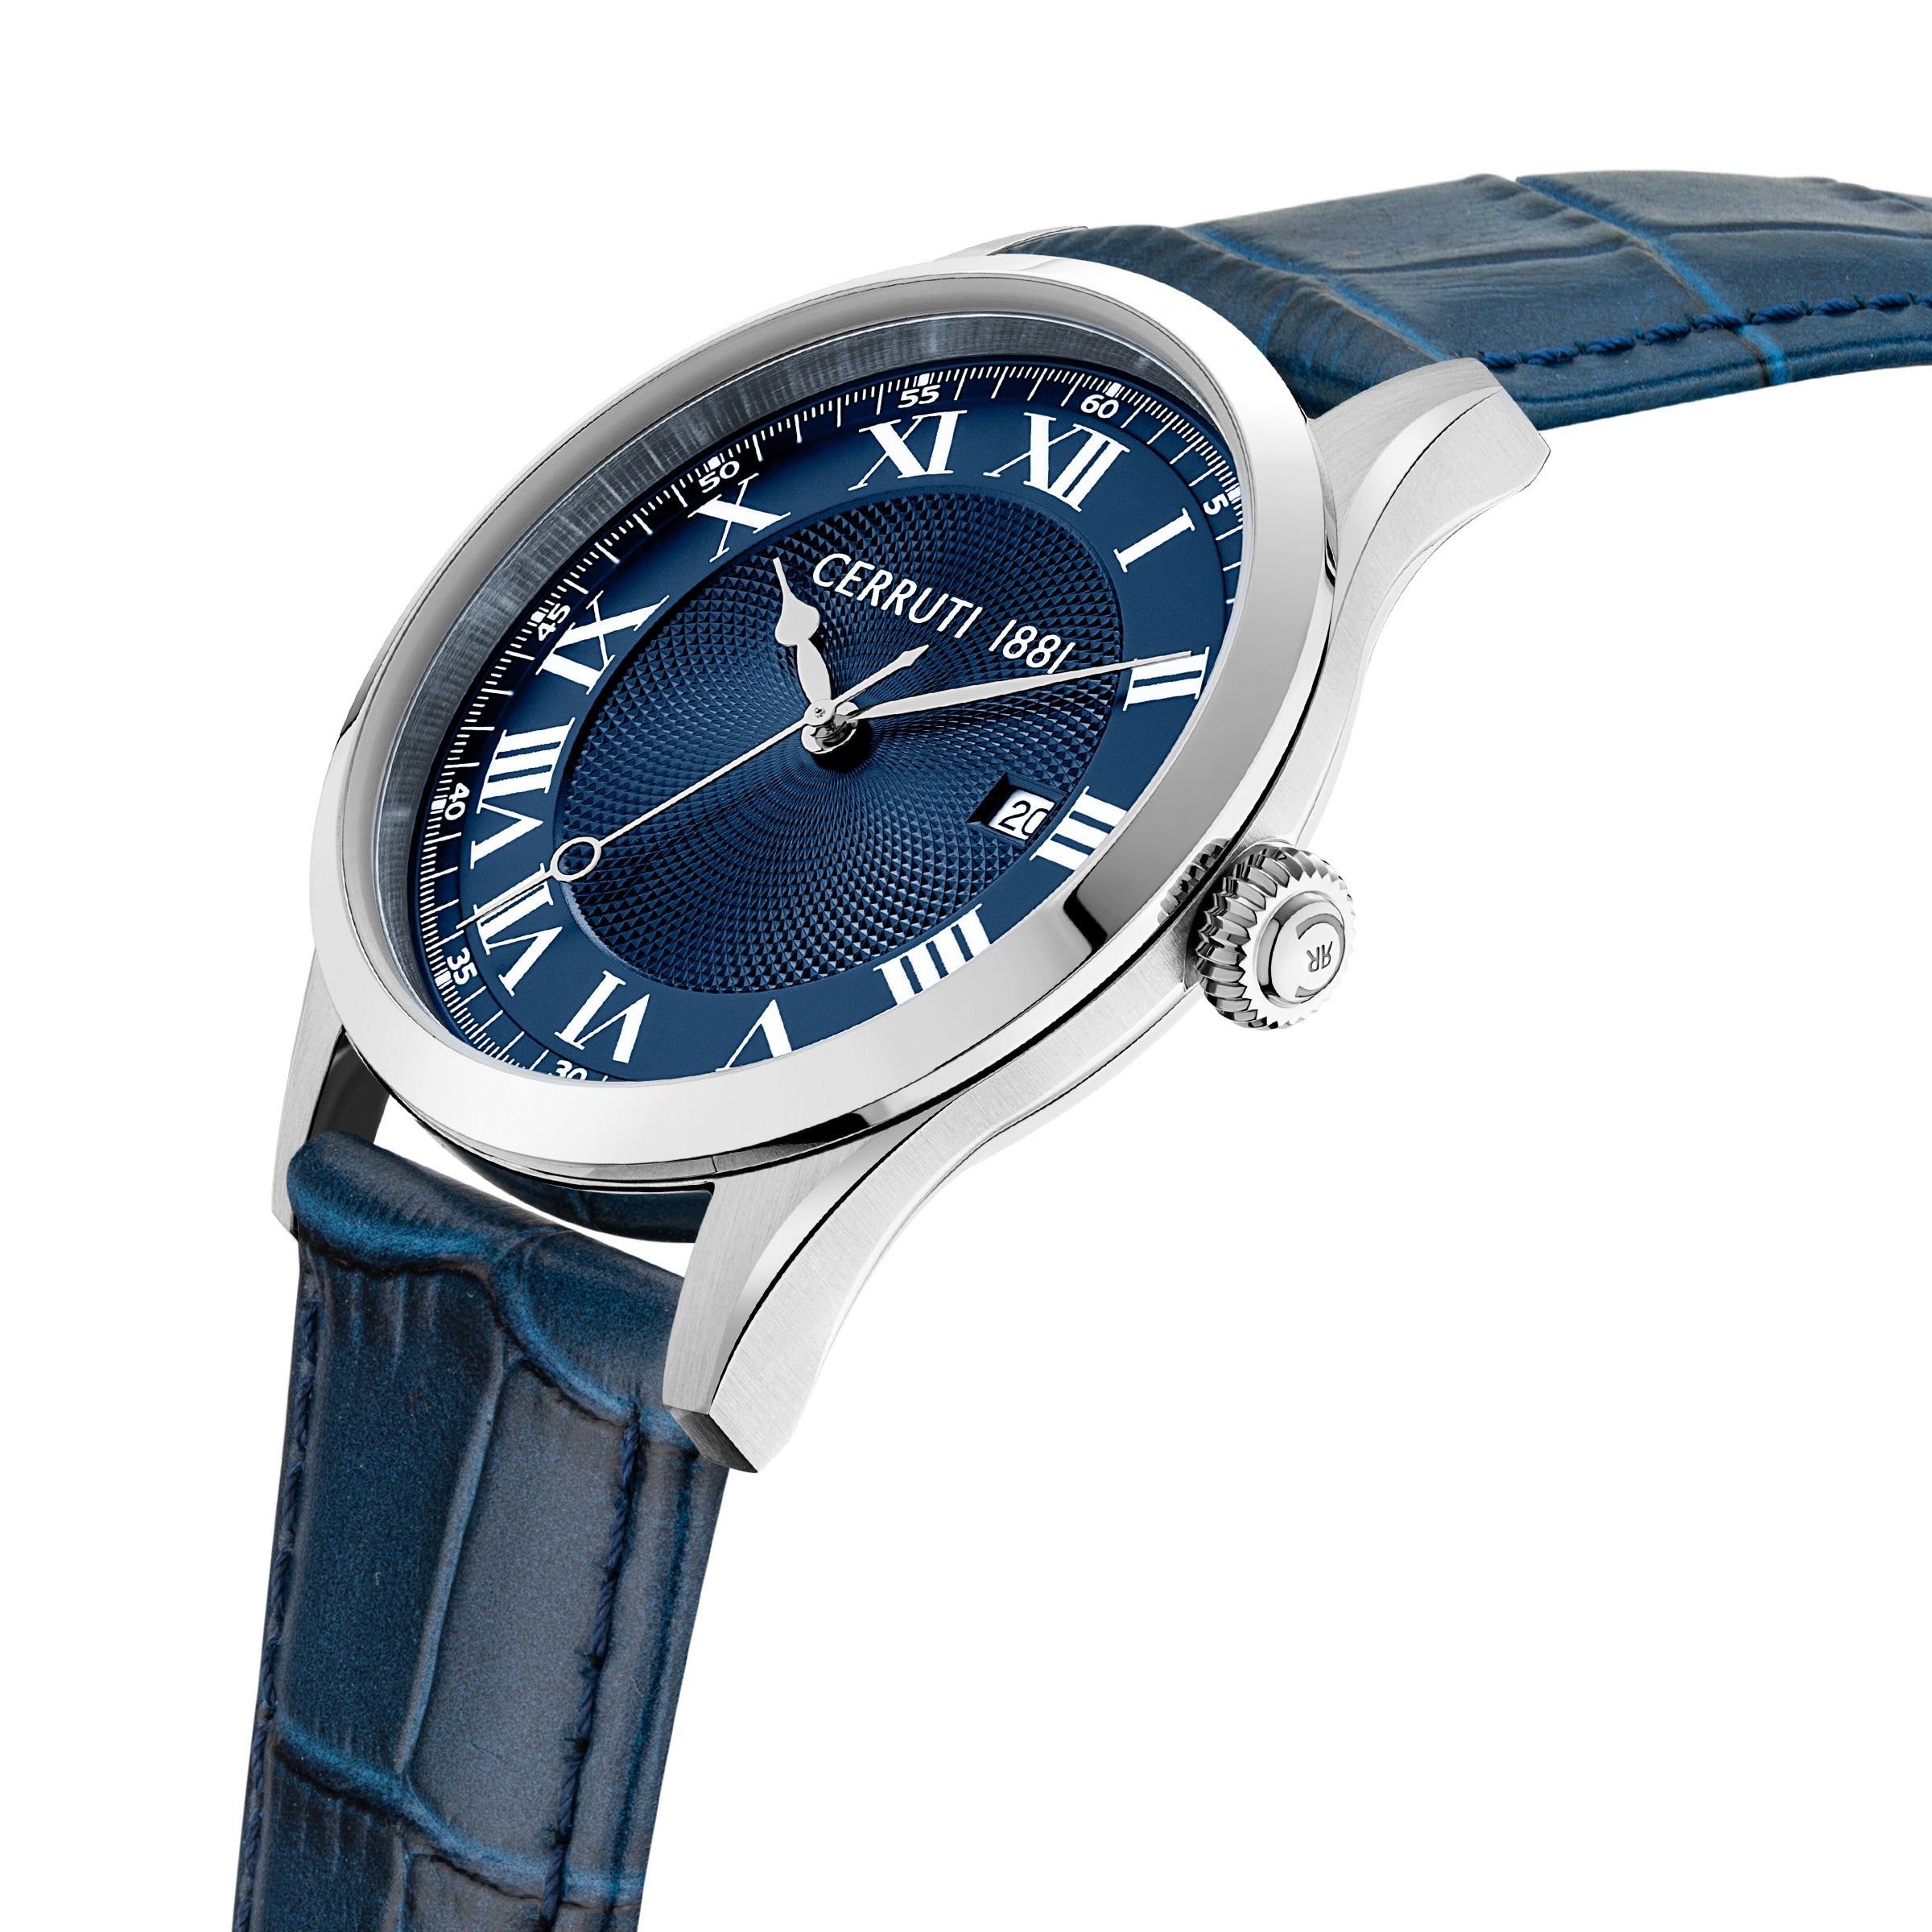 Cerruti Men's Quartz Blue Dial Watch - CER-0409